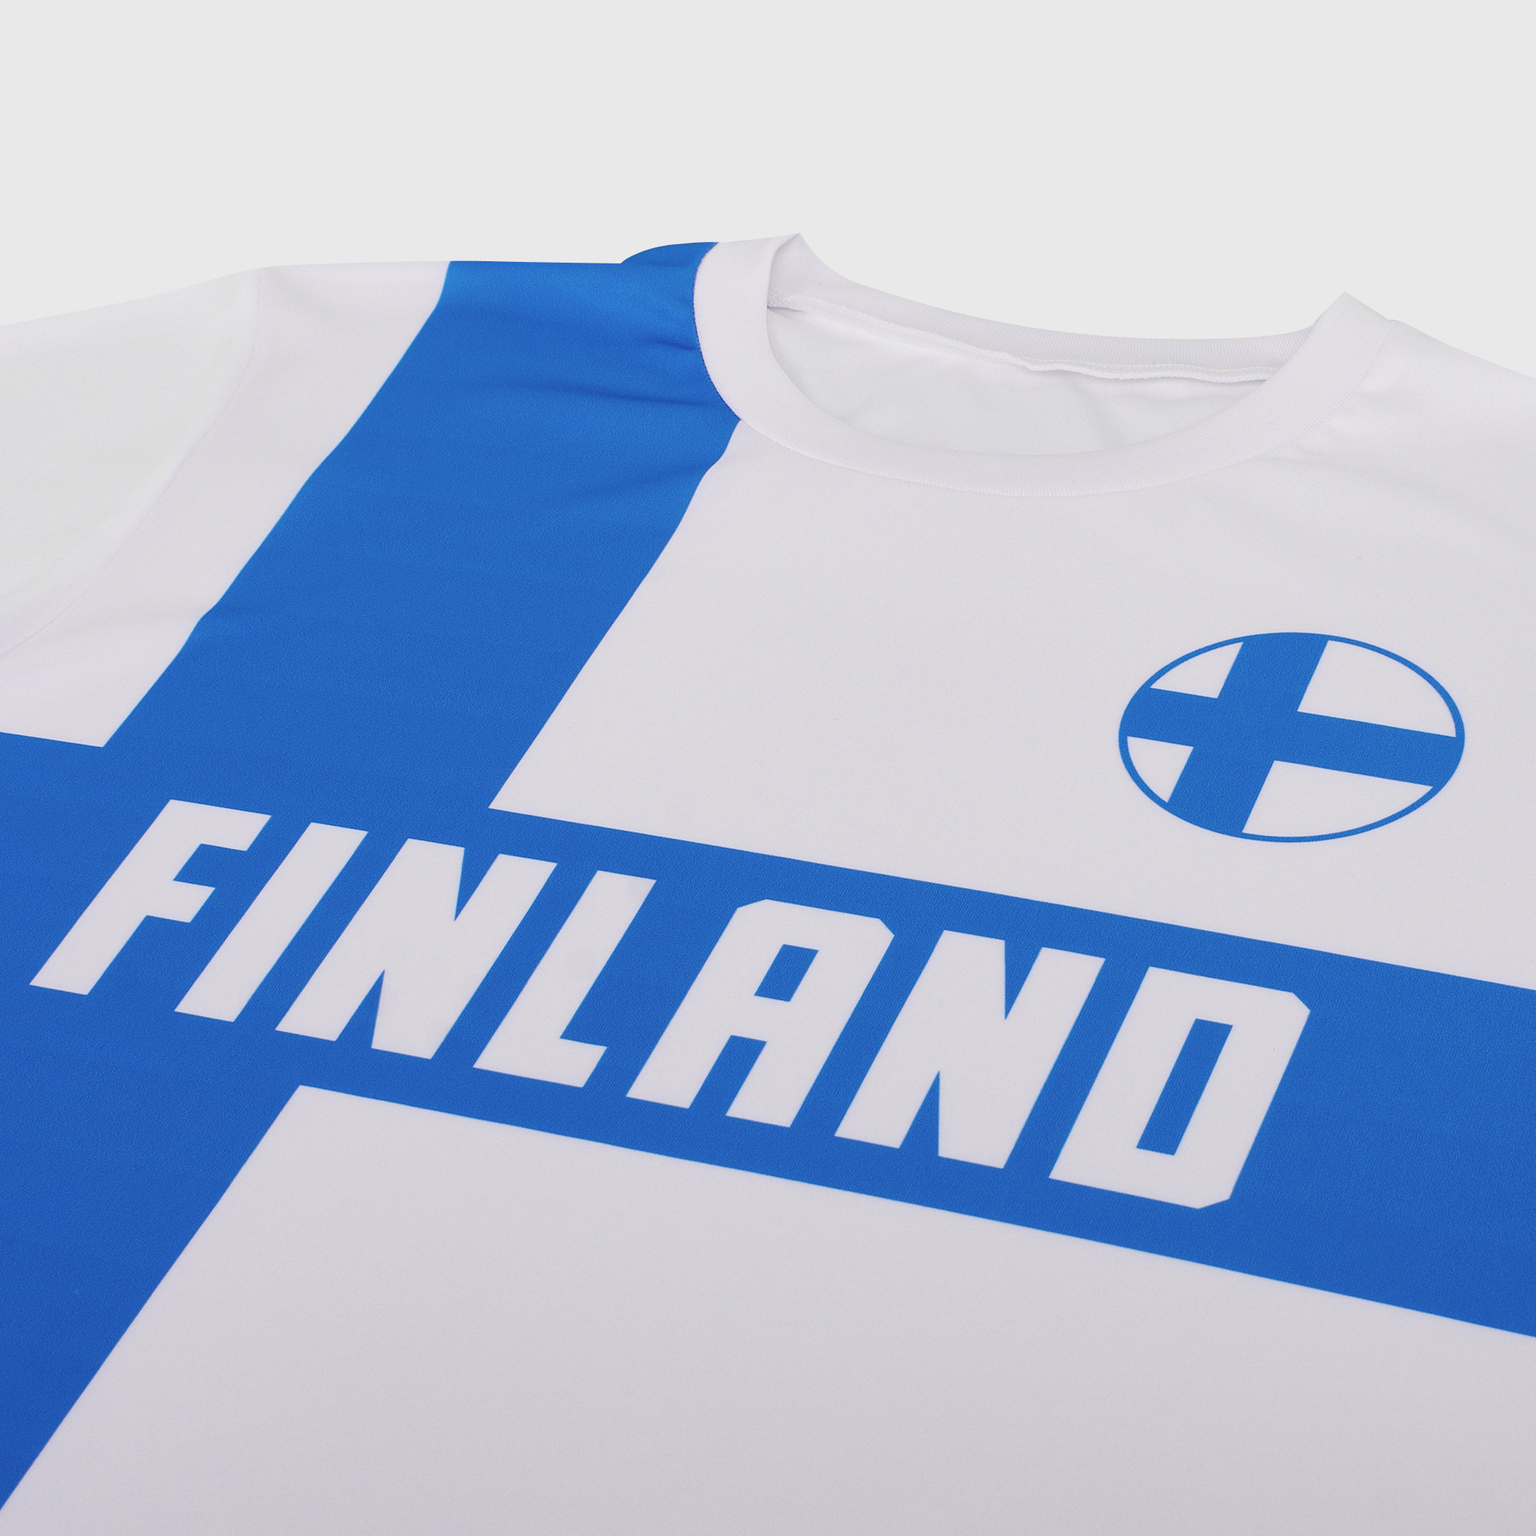 Футболка сборной Финляндии сезон 2020/21